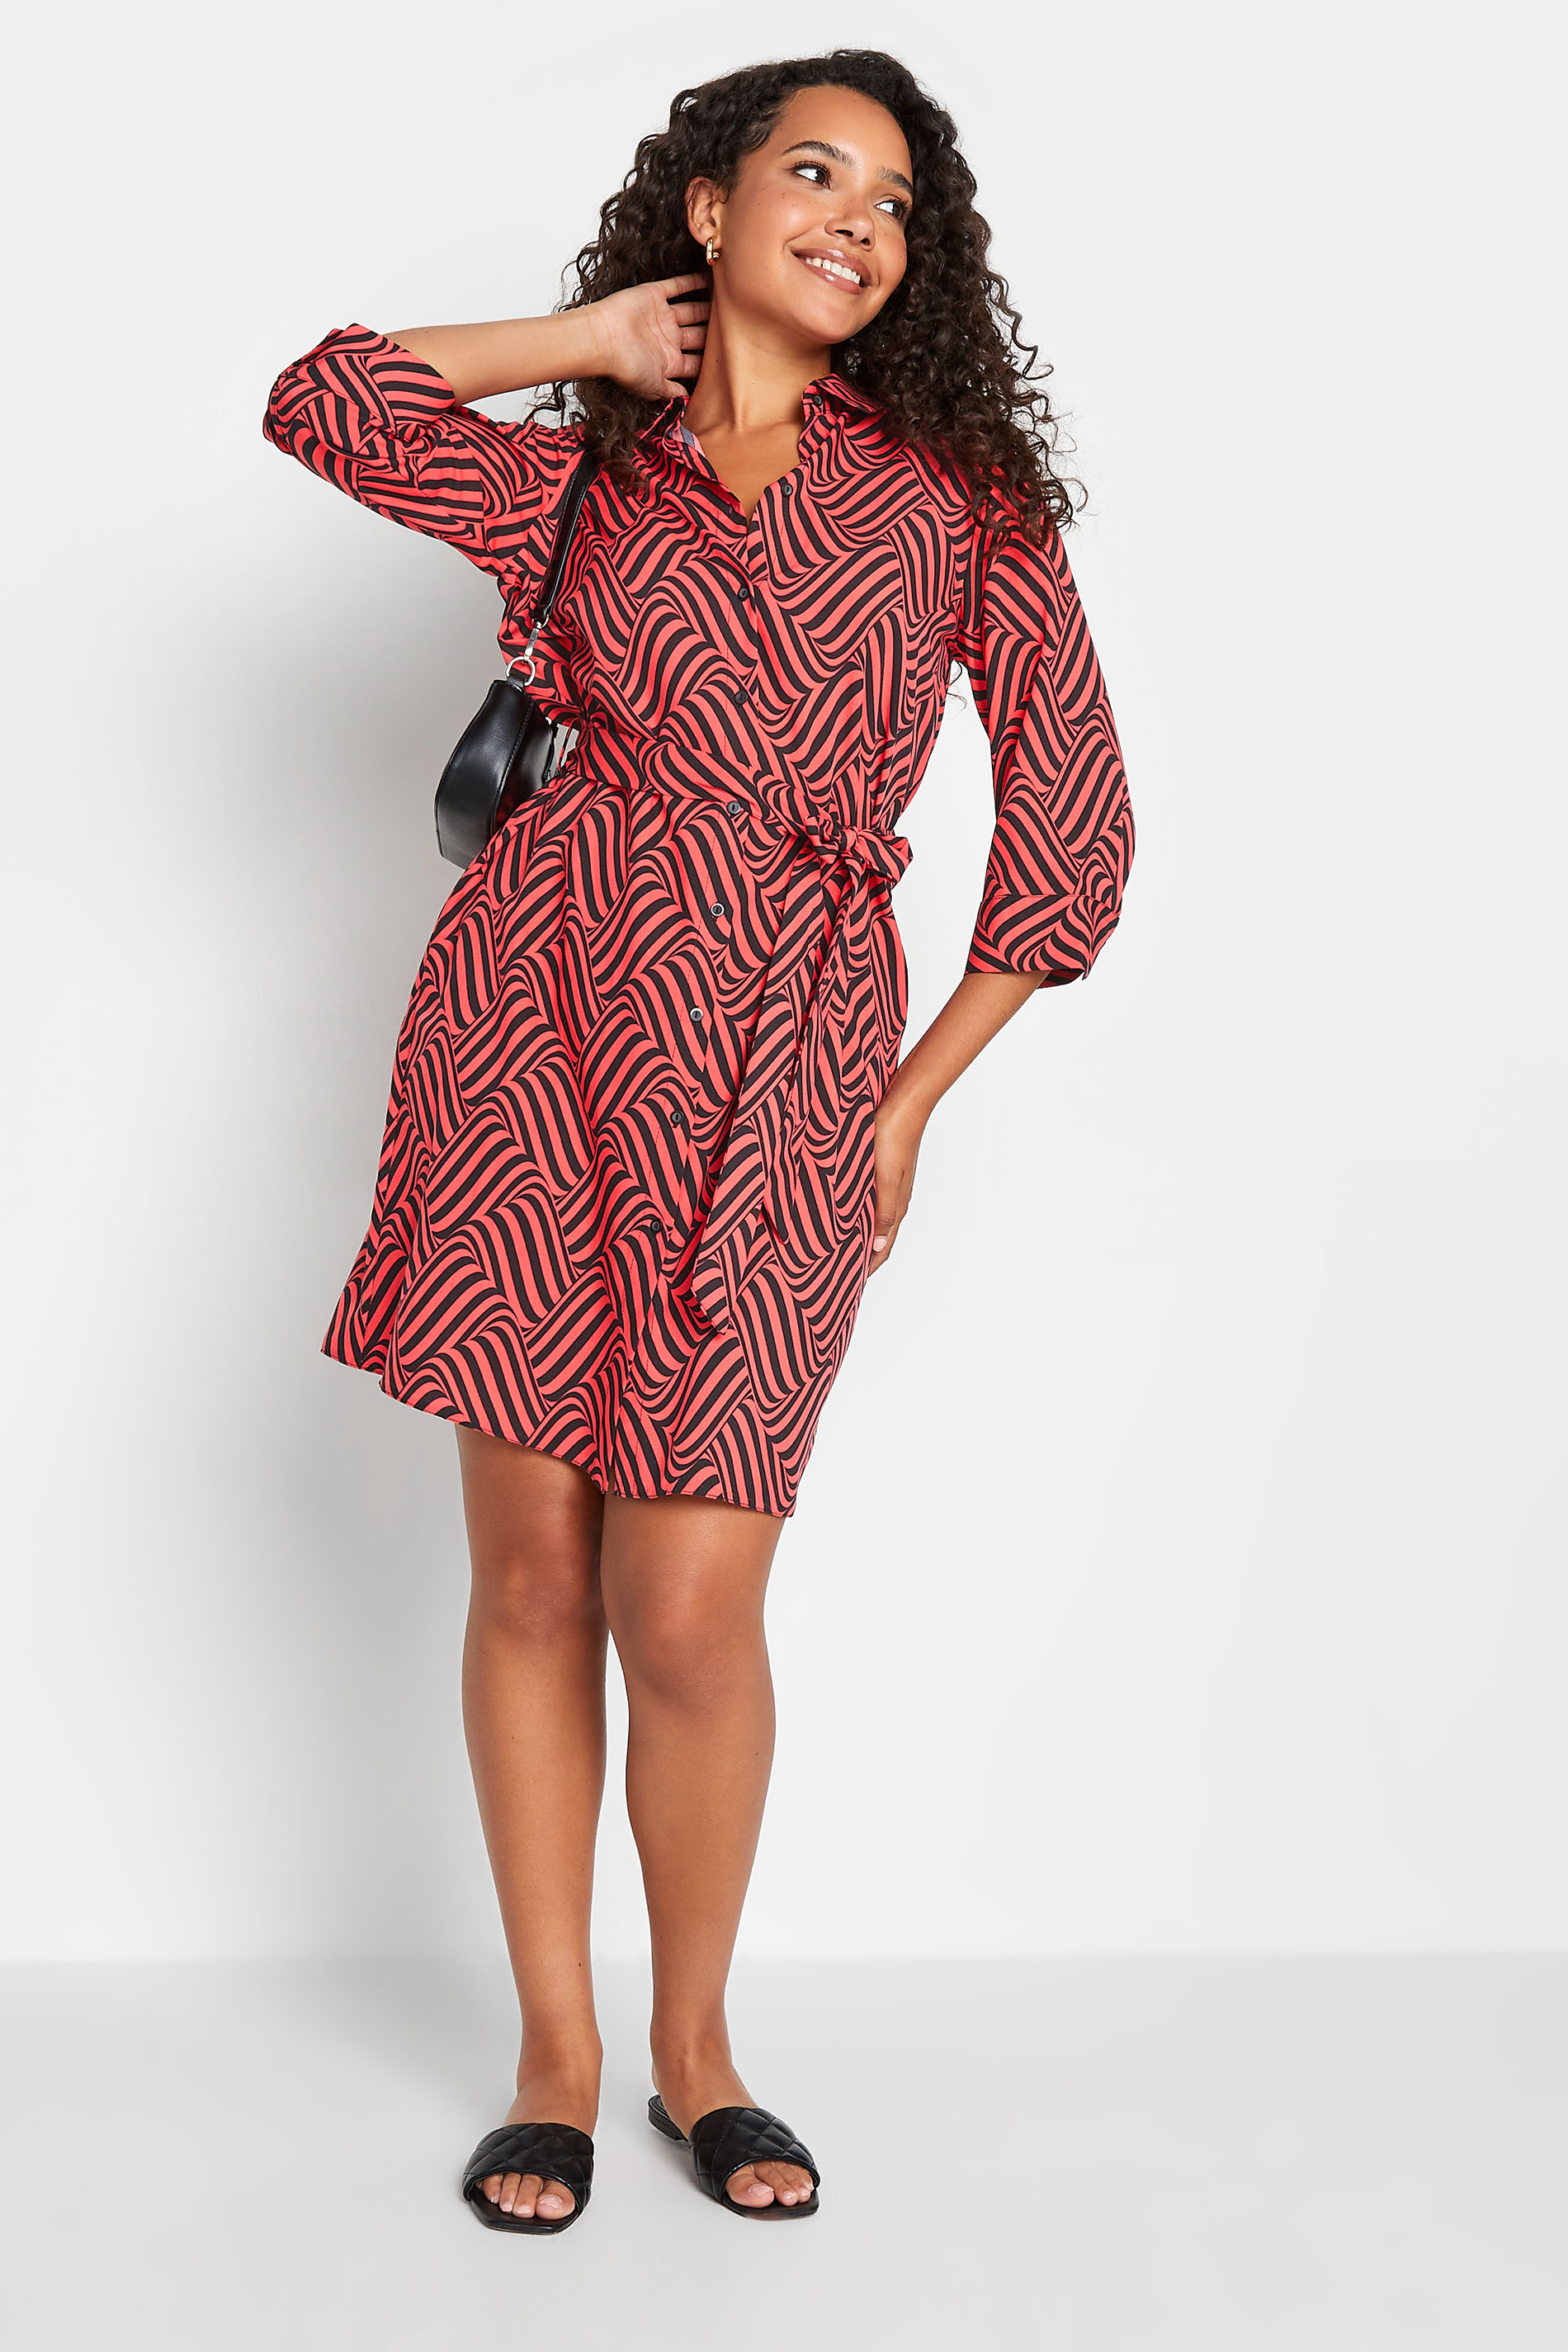 M&Co Red Geometric Print Shirt Dress | M&Co 1